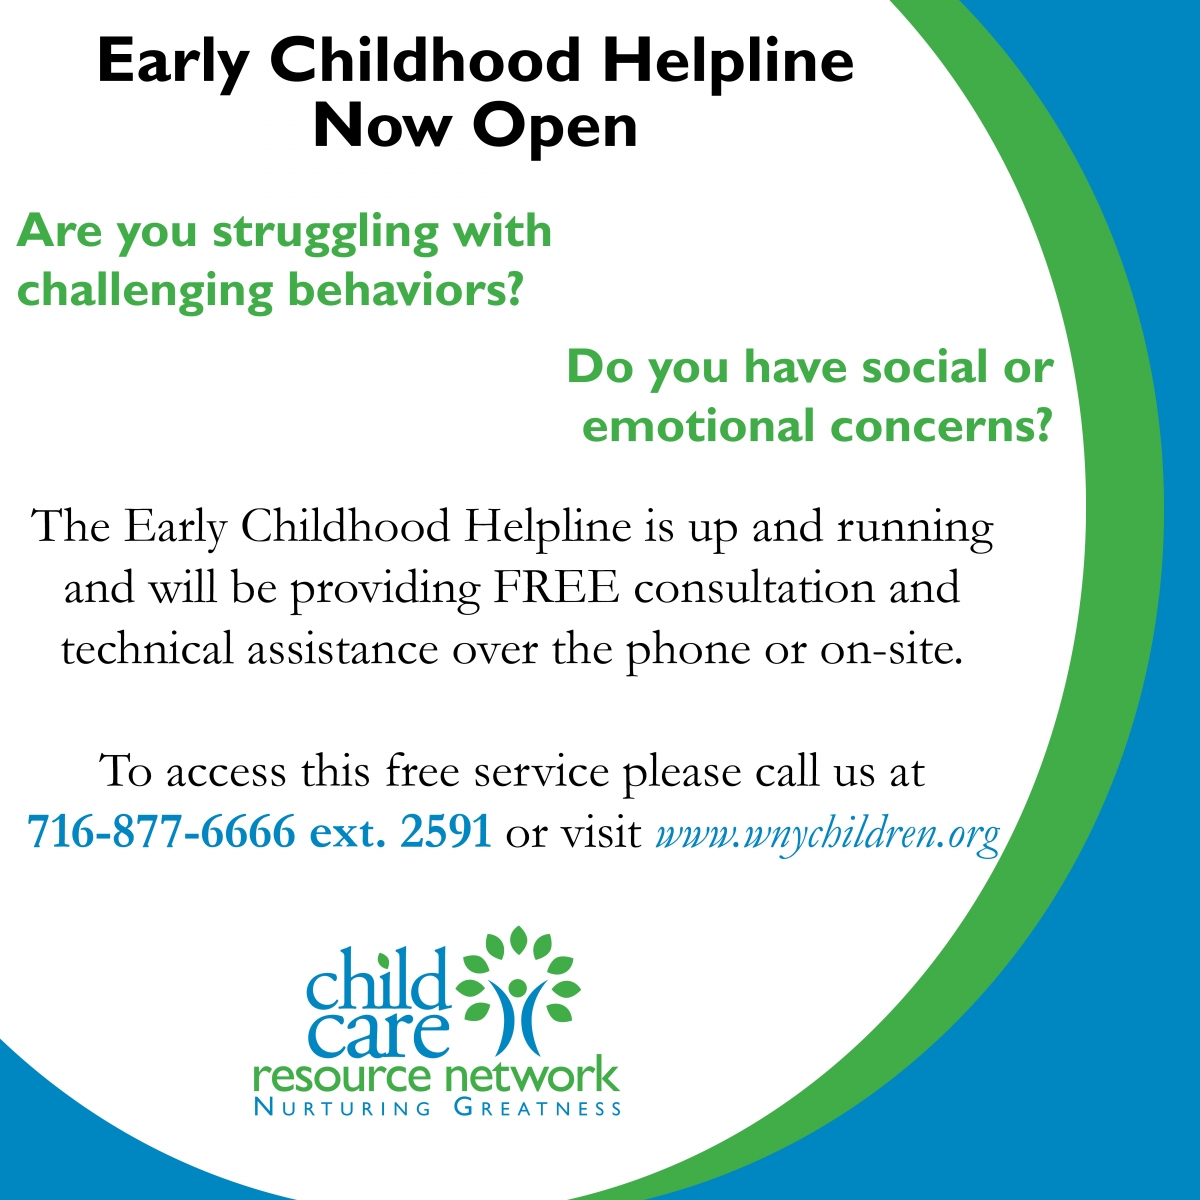 Early Childhood Helpline Now Open